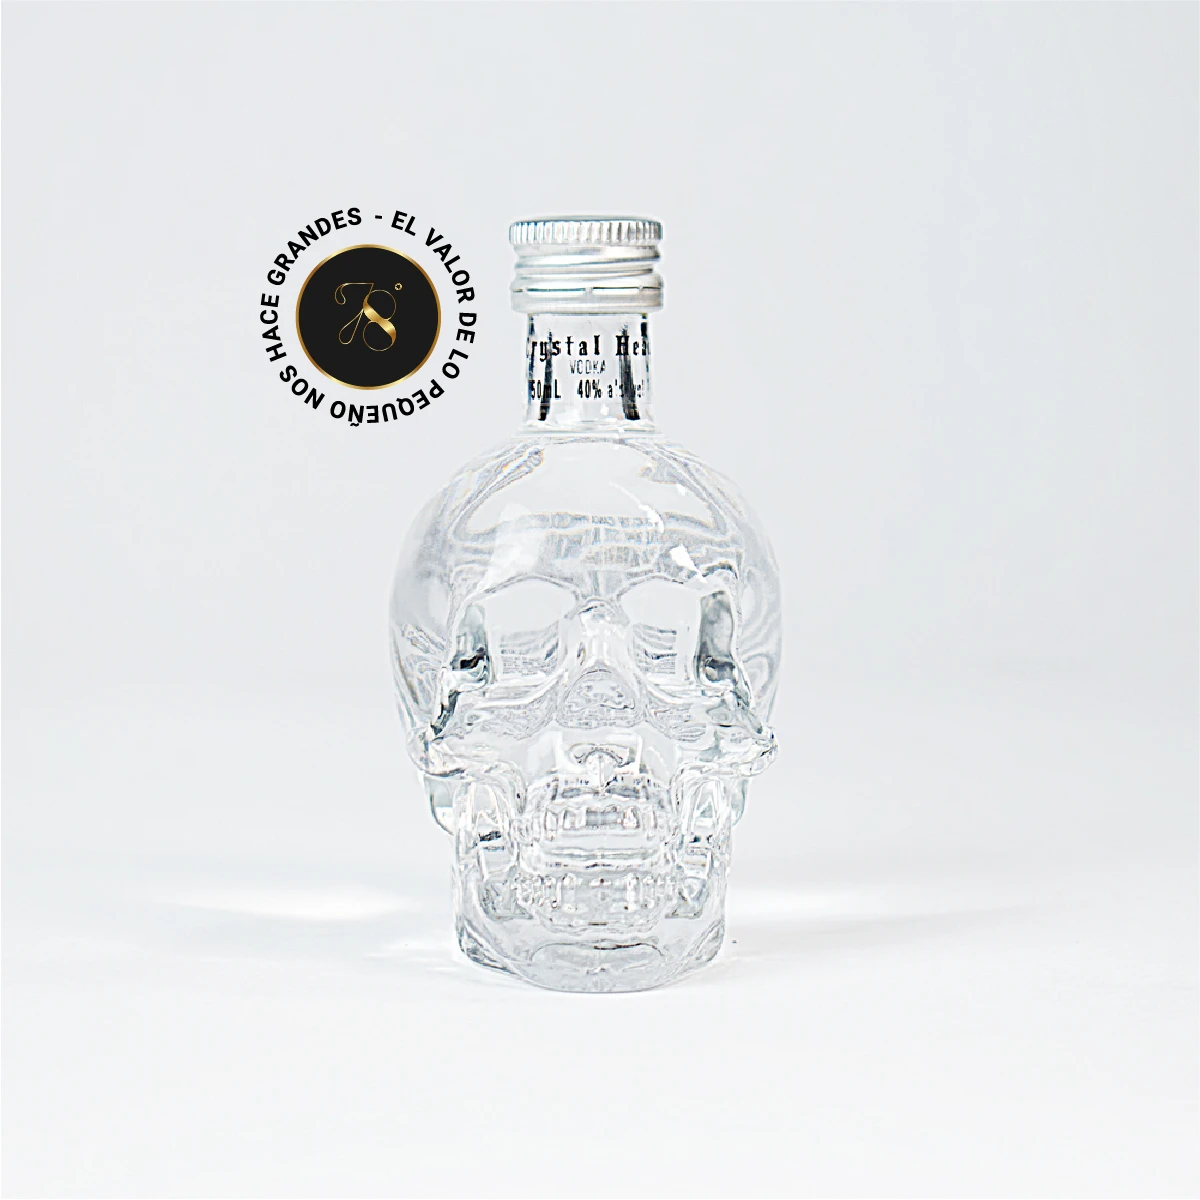 MB05 - Mini Botella - Botellita de licor de Vodka Crystal Head más caja de regalo premium e invitación o fotografía personalizada. Ideal para eventos, recuerdos, bodas o regalos corporativos.